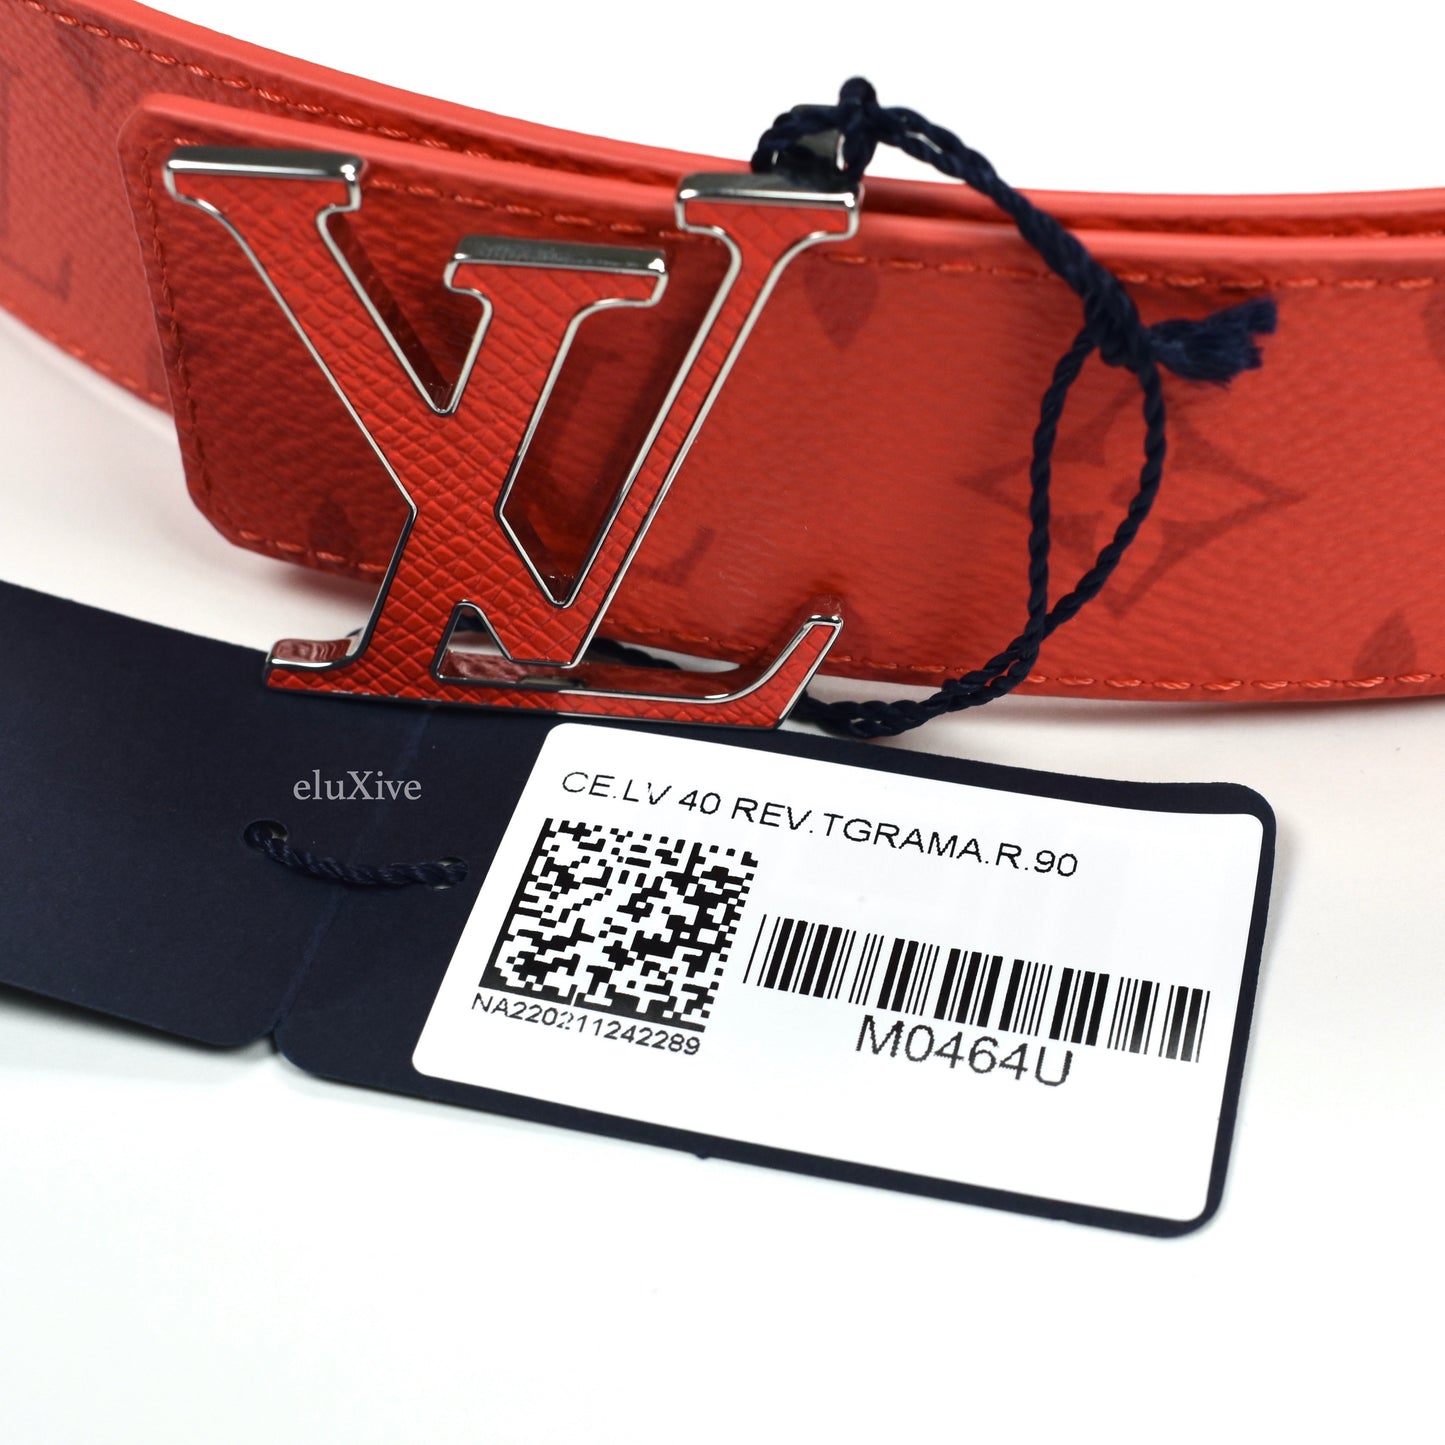 Louis Vuitton - Red Monogram LV Initiales Logo Buckle Belt